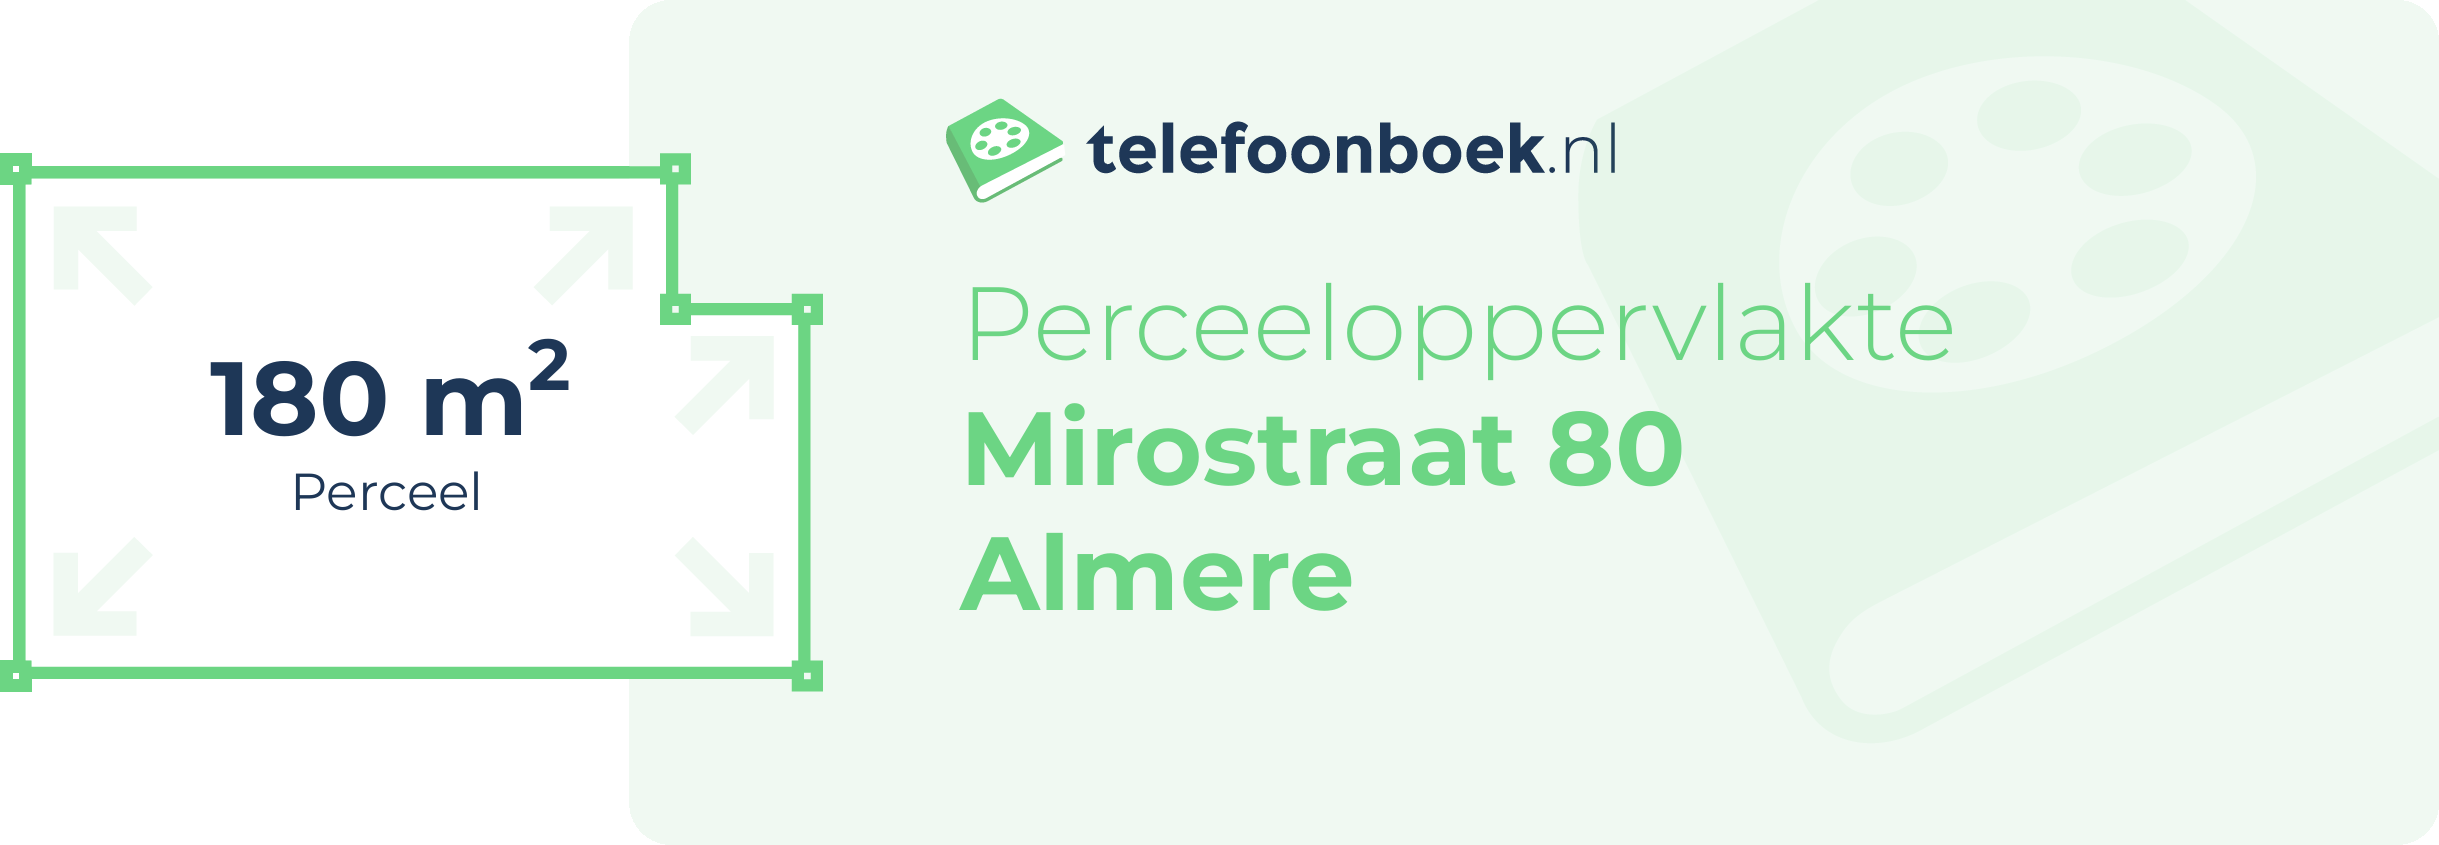 Perceeloppervlakte Mirostraat 80 Almere